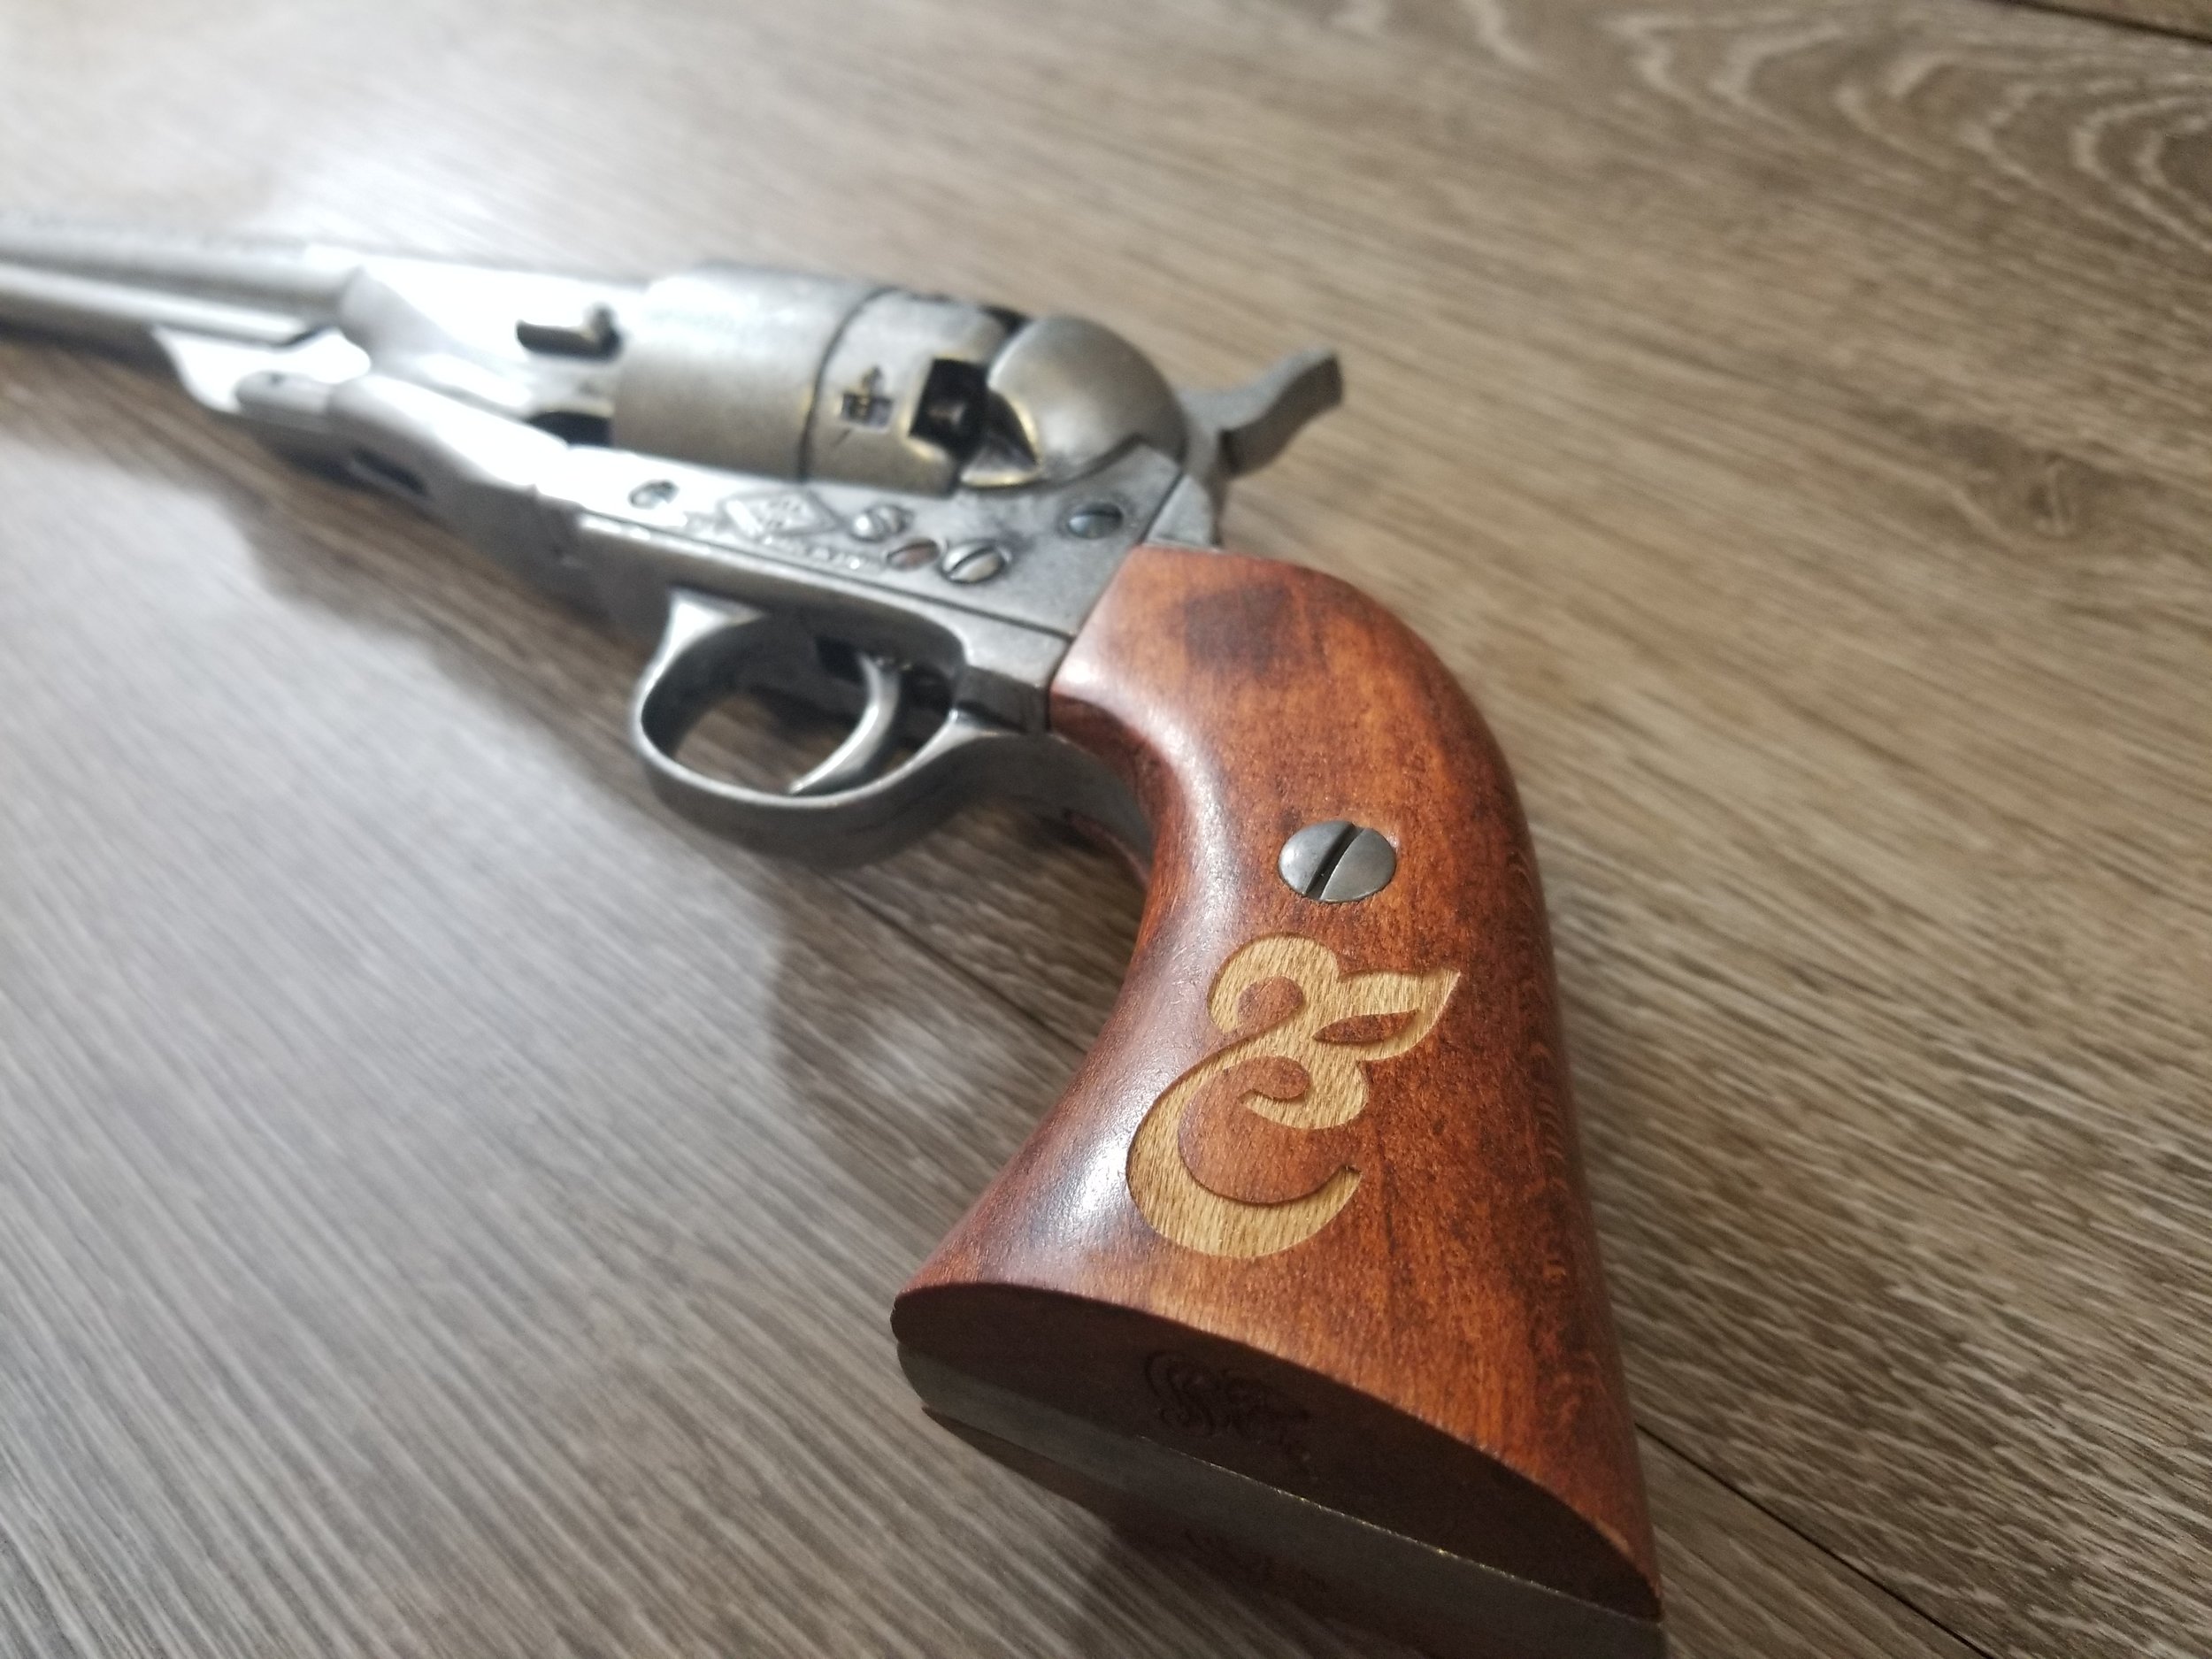 Custom Engraved Pistol Grip - Firearm Projects from Engrave It Houston (Copy)